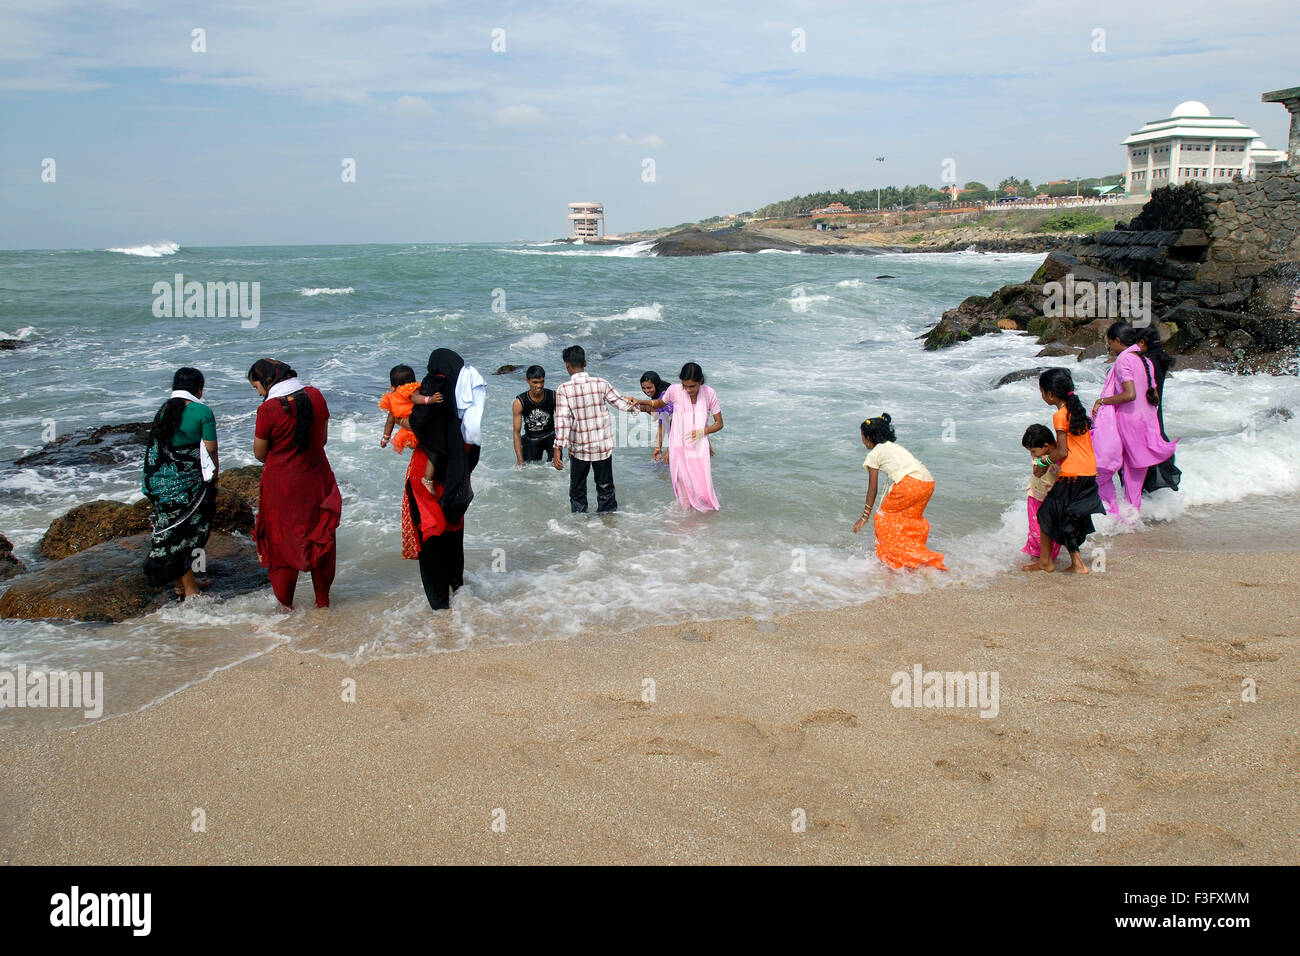 Statue of Thiruvalluvar in the Ocean at Kanyakumari in Tamil Nadu India Editorial Photography - Image of kanyakumari, sculpture: 211138112